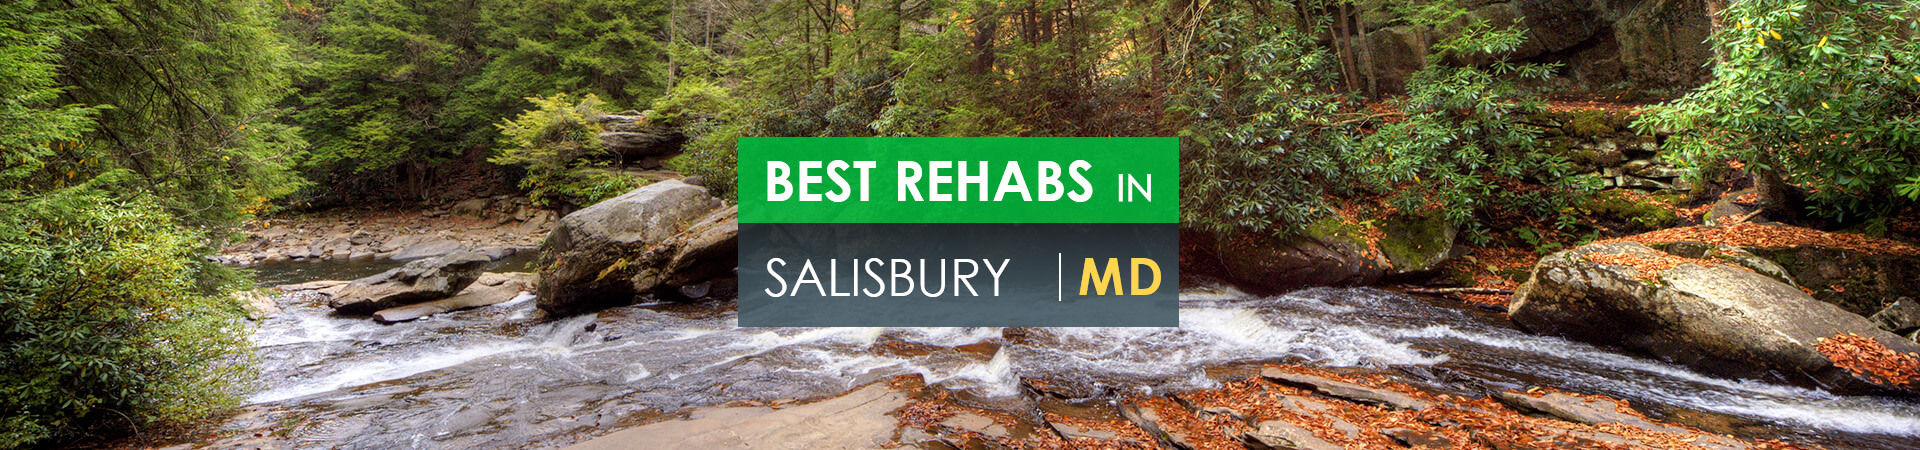 Best rehabs in Salisbury, MD